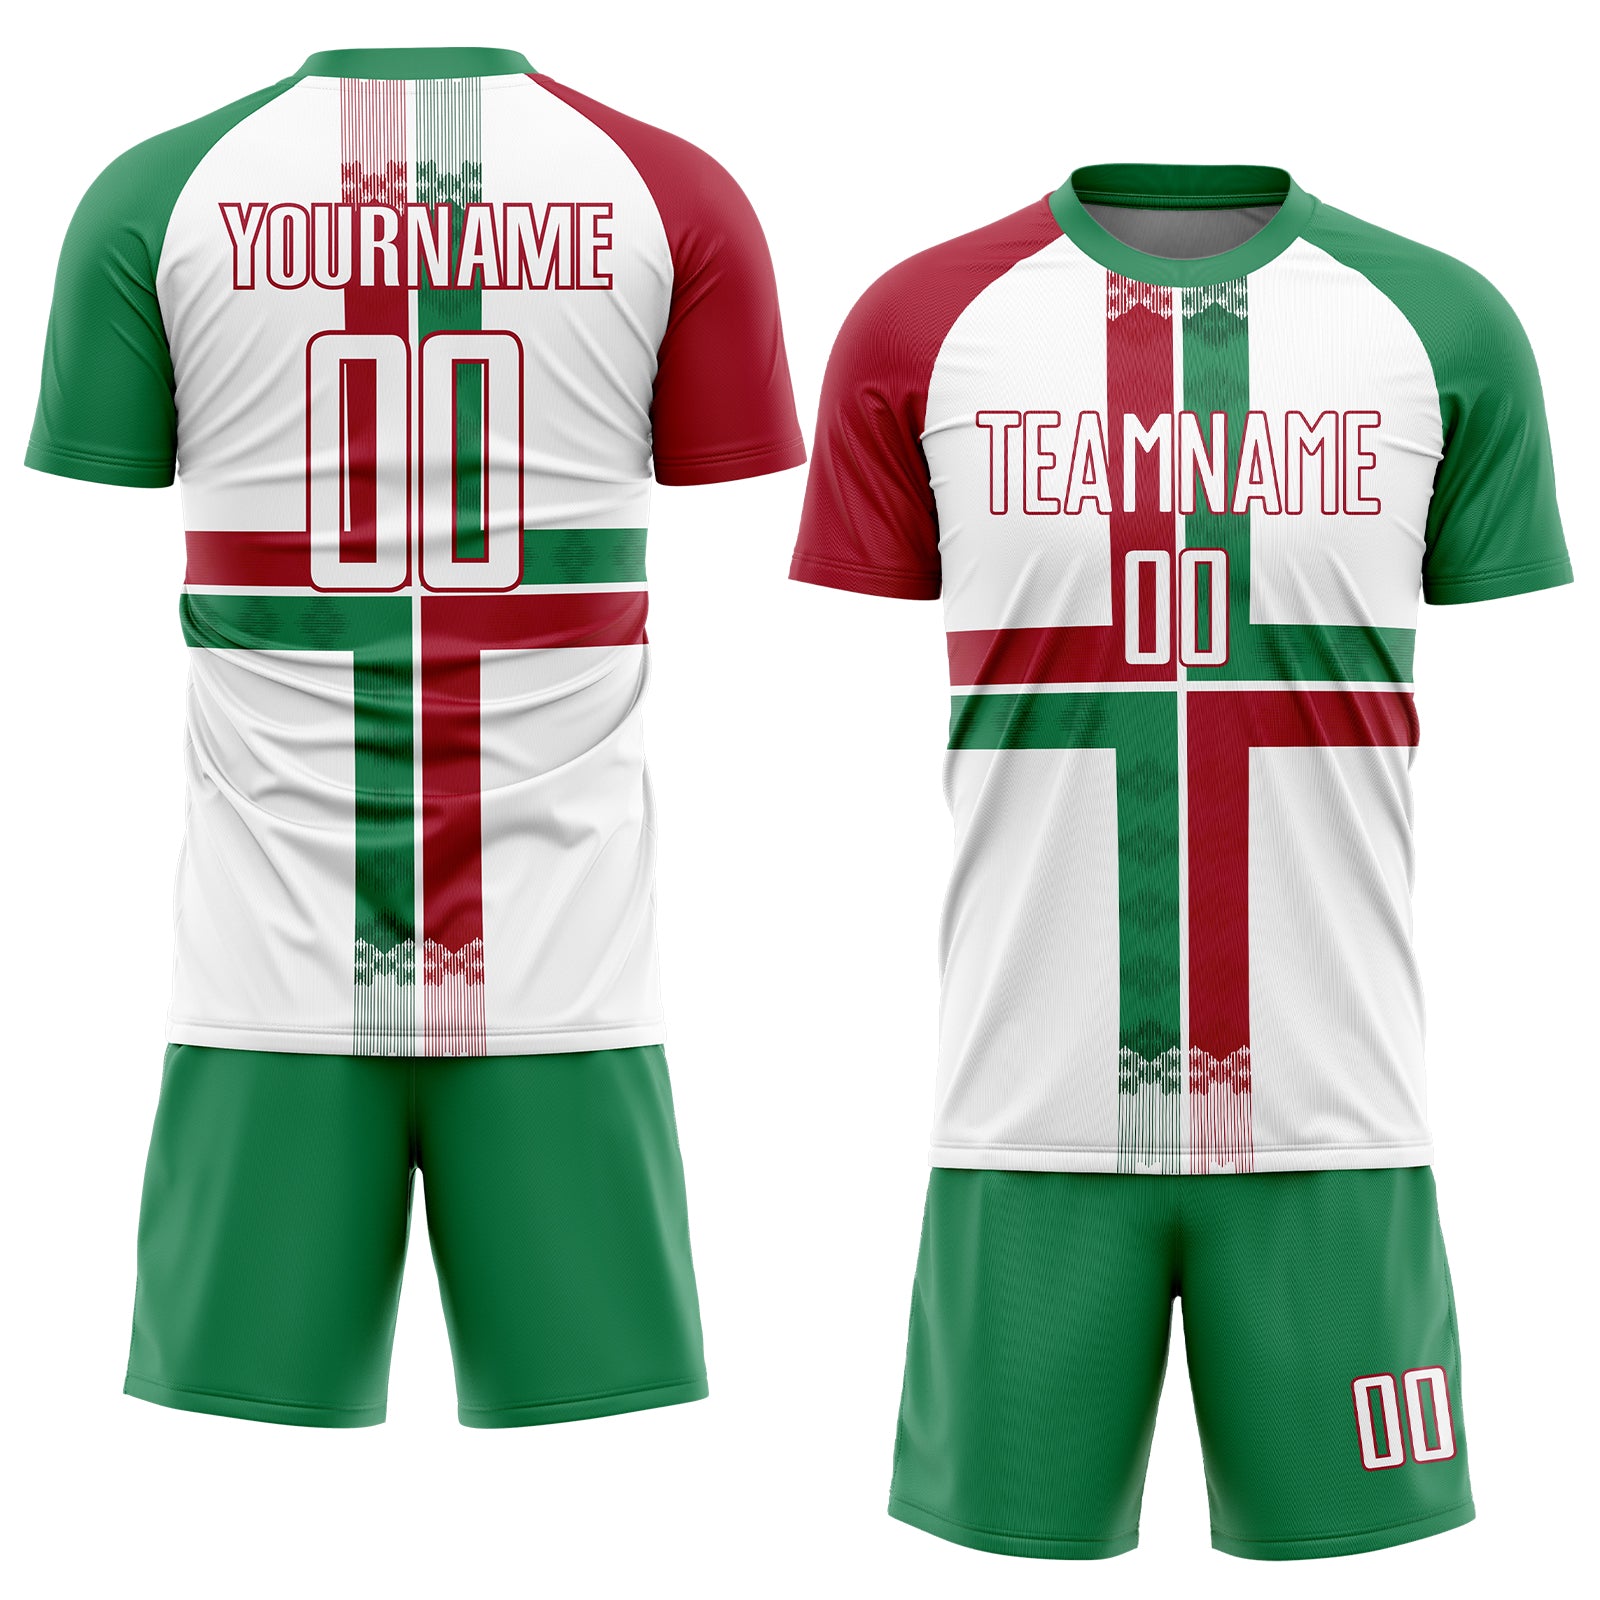 FANSIDEA Custom Soccer Jersey Uniform White Kelly Green-crimson Sublimation Mexico Men's Size:XL